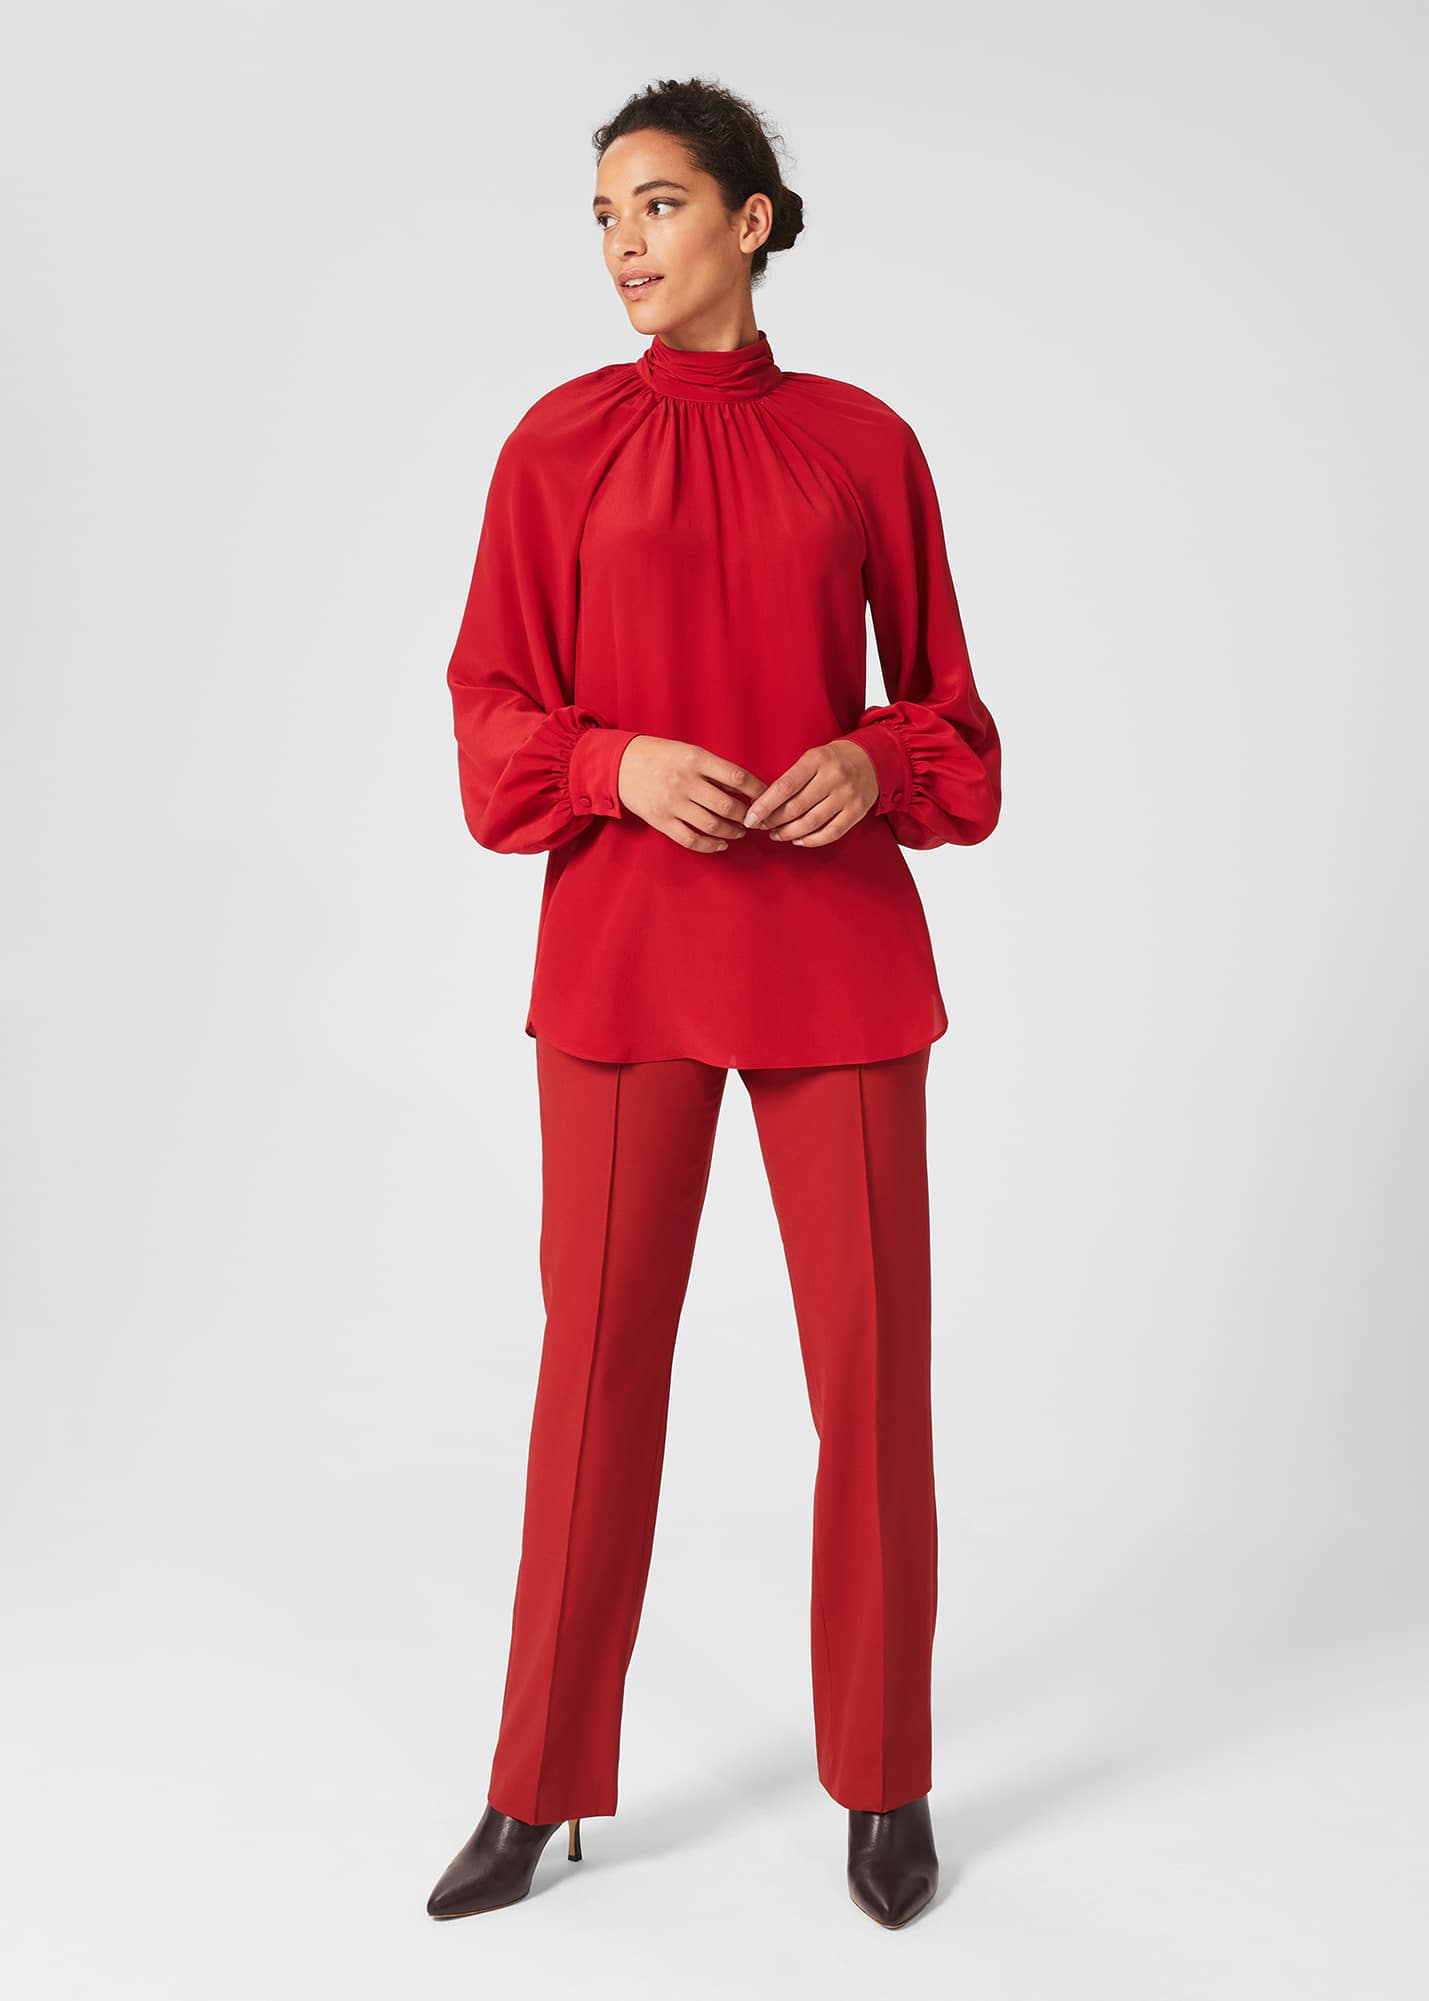 Hobbs Women's Mollie Silk Blouse - Red